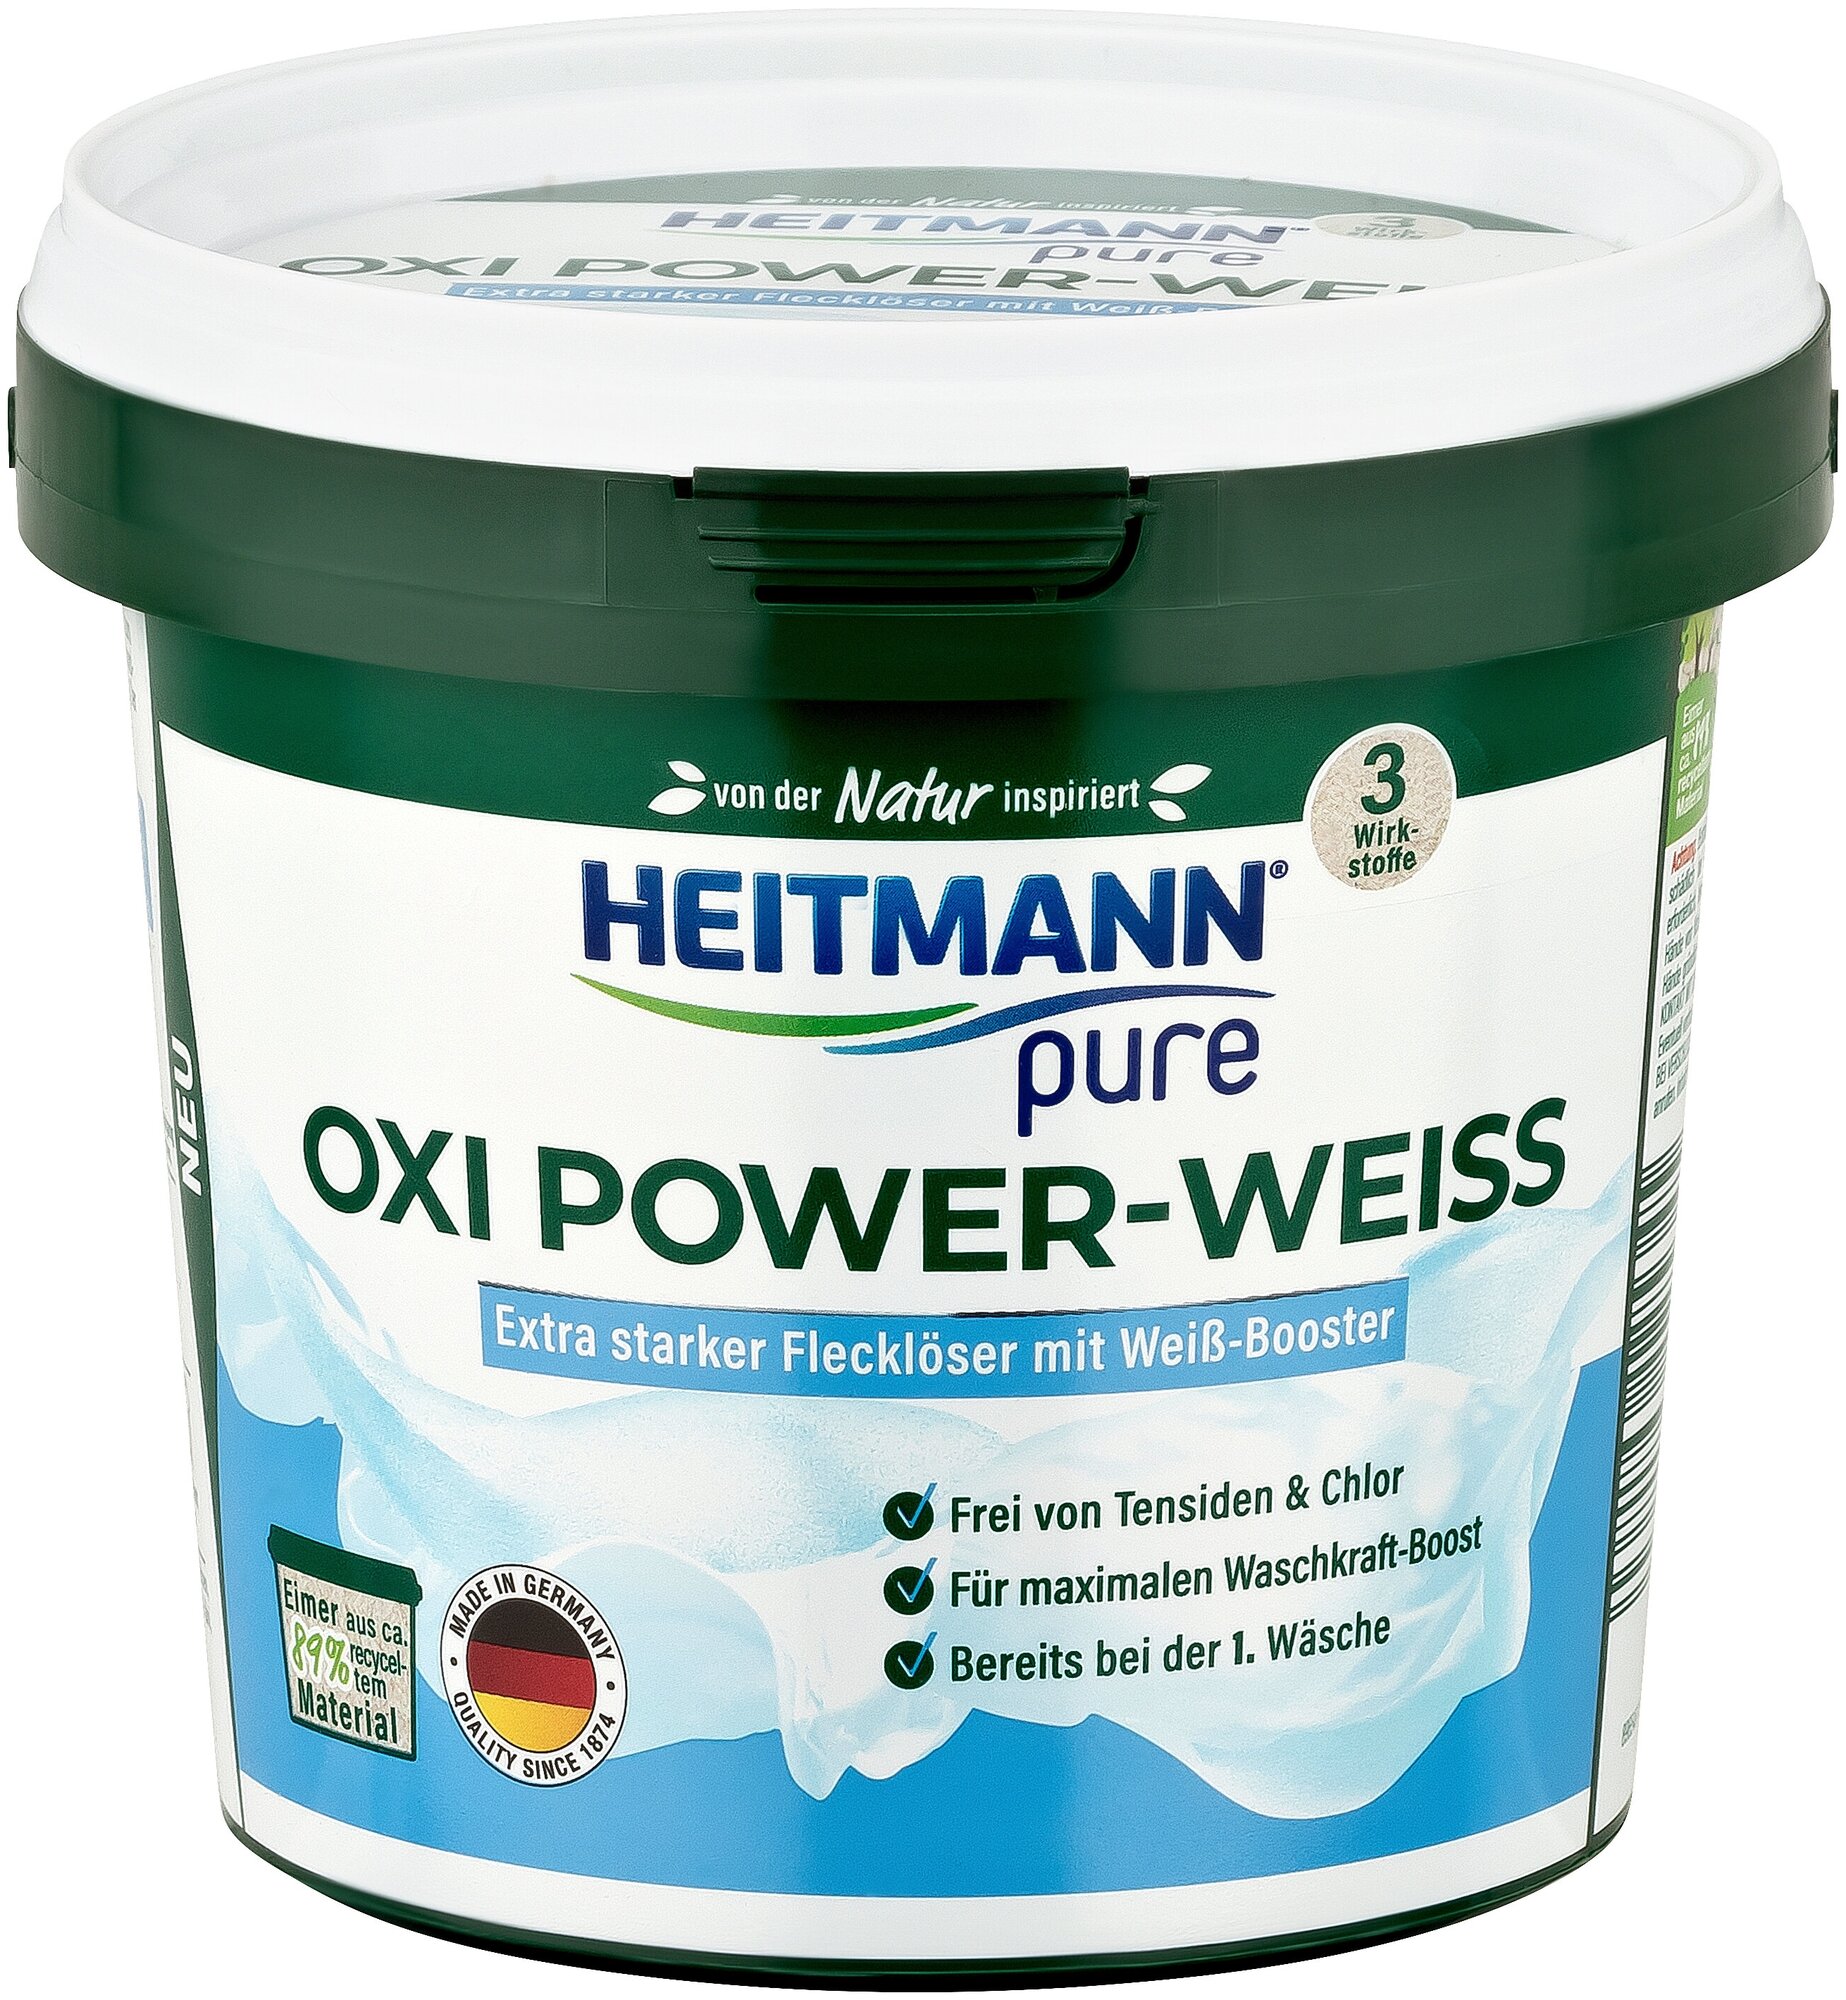 Heitmann Oxi Power-Weiss Пятновыводитель для белых тканей, 500 г